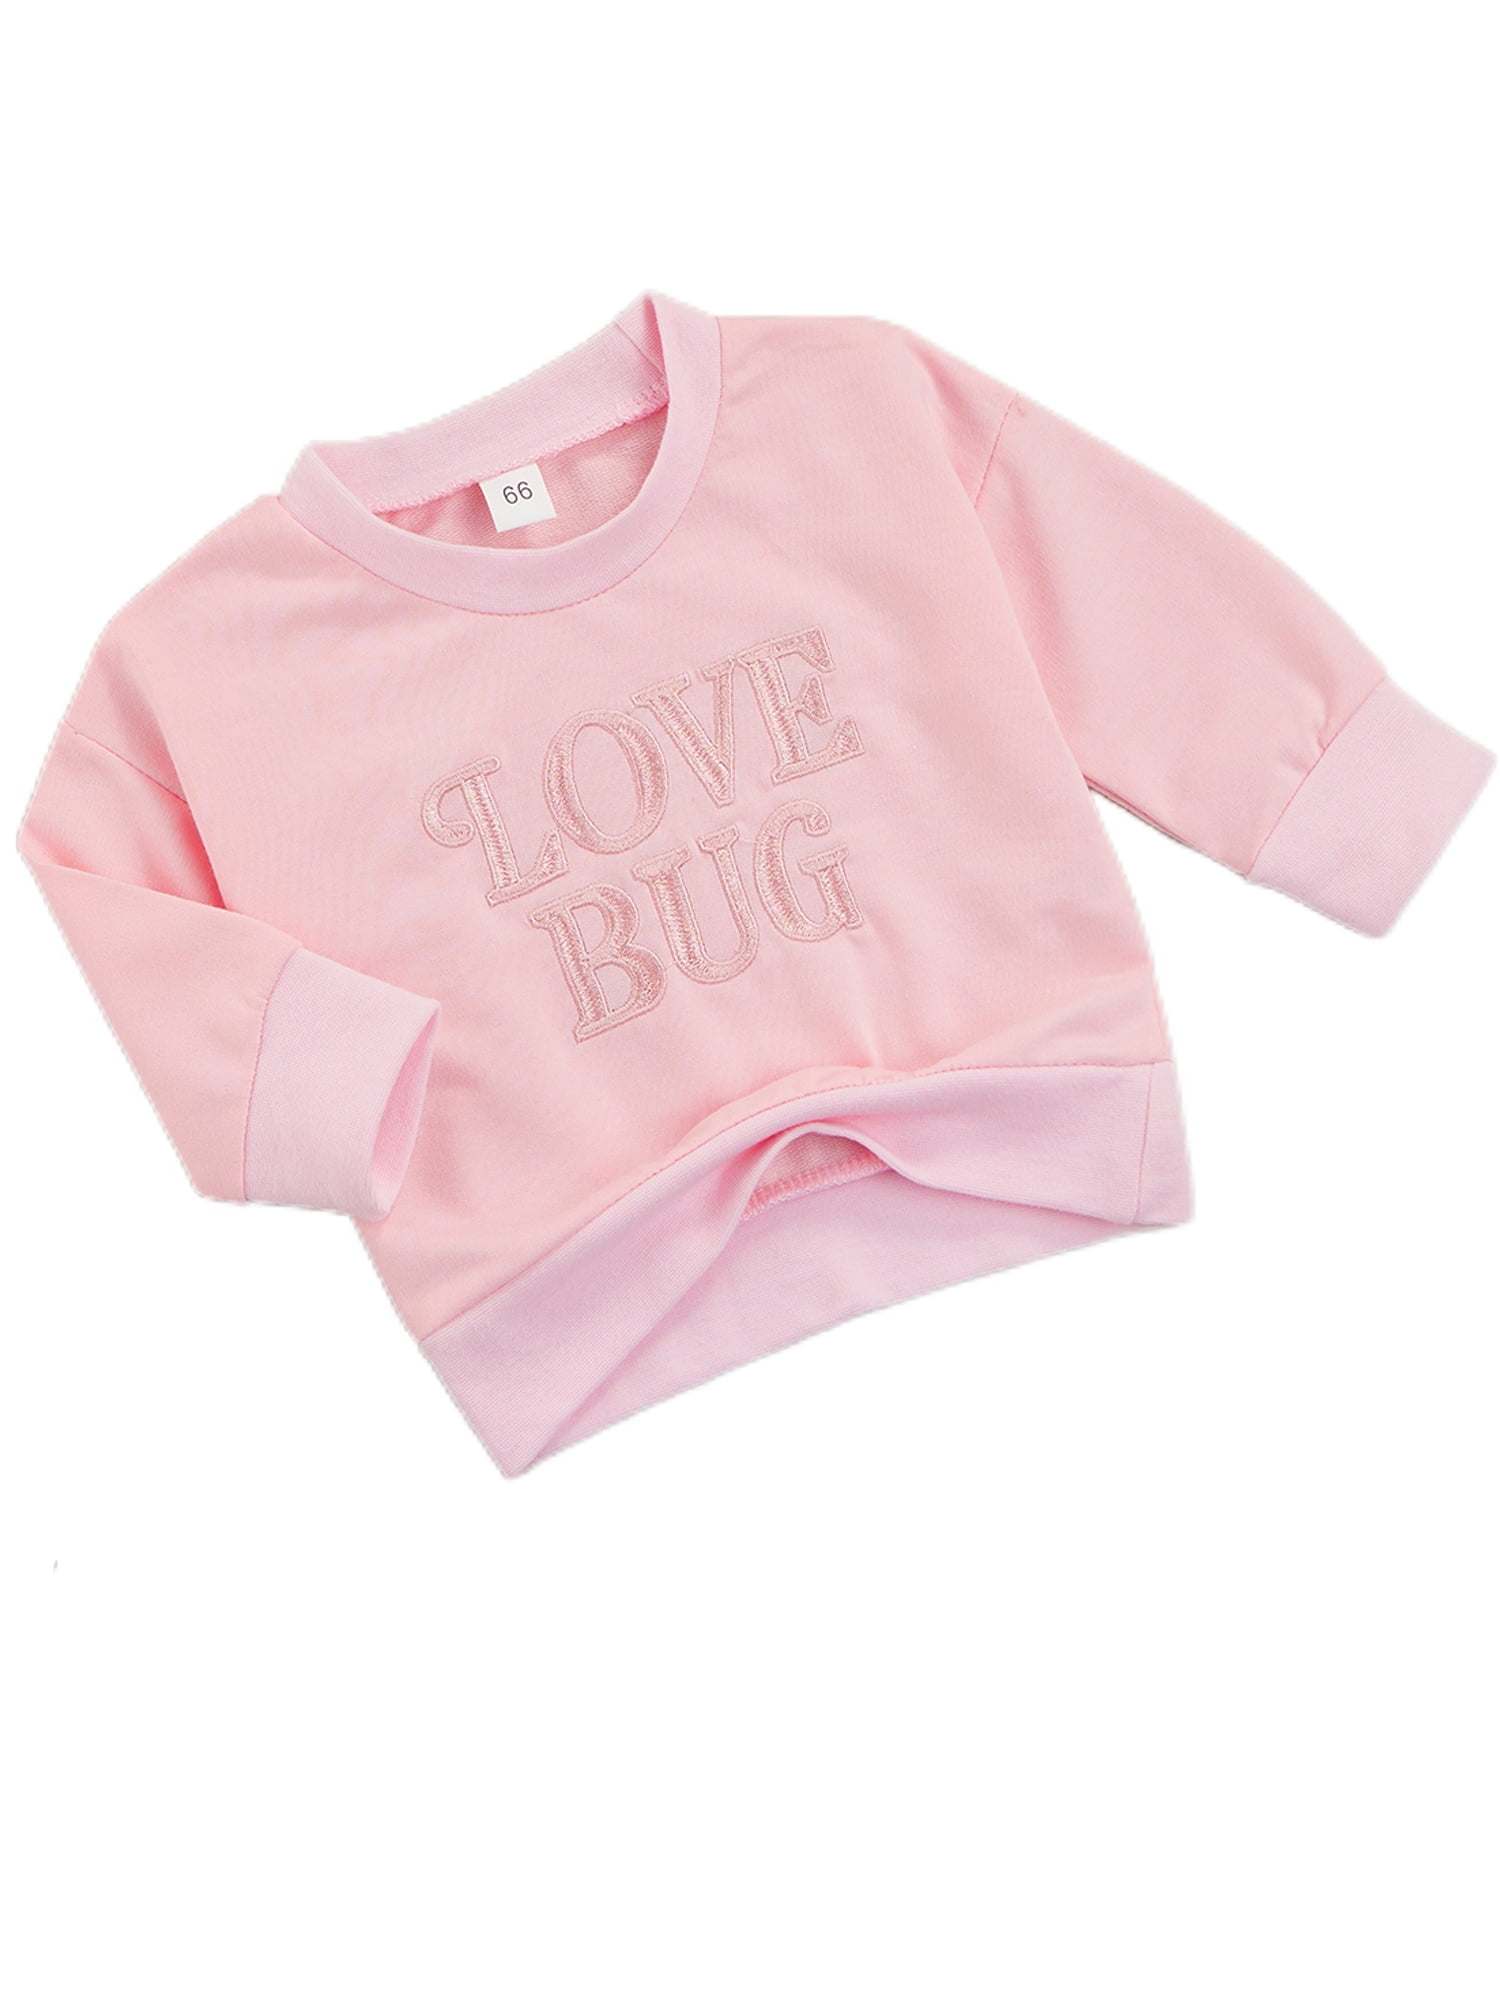 Ajiusmm Pennywise ItchildrenS Round Neck Sweater Toddler Fashion Casual Juvenile Sweatshirt 